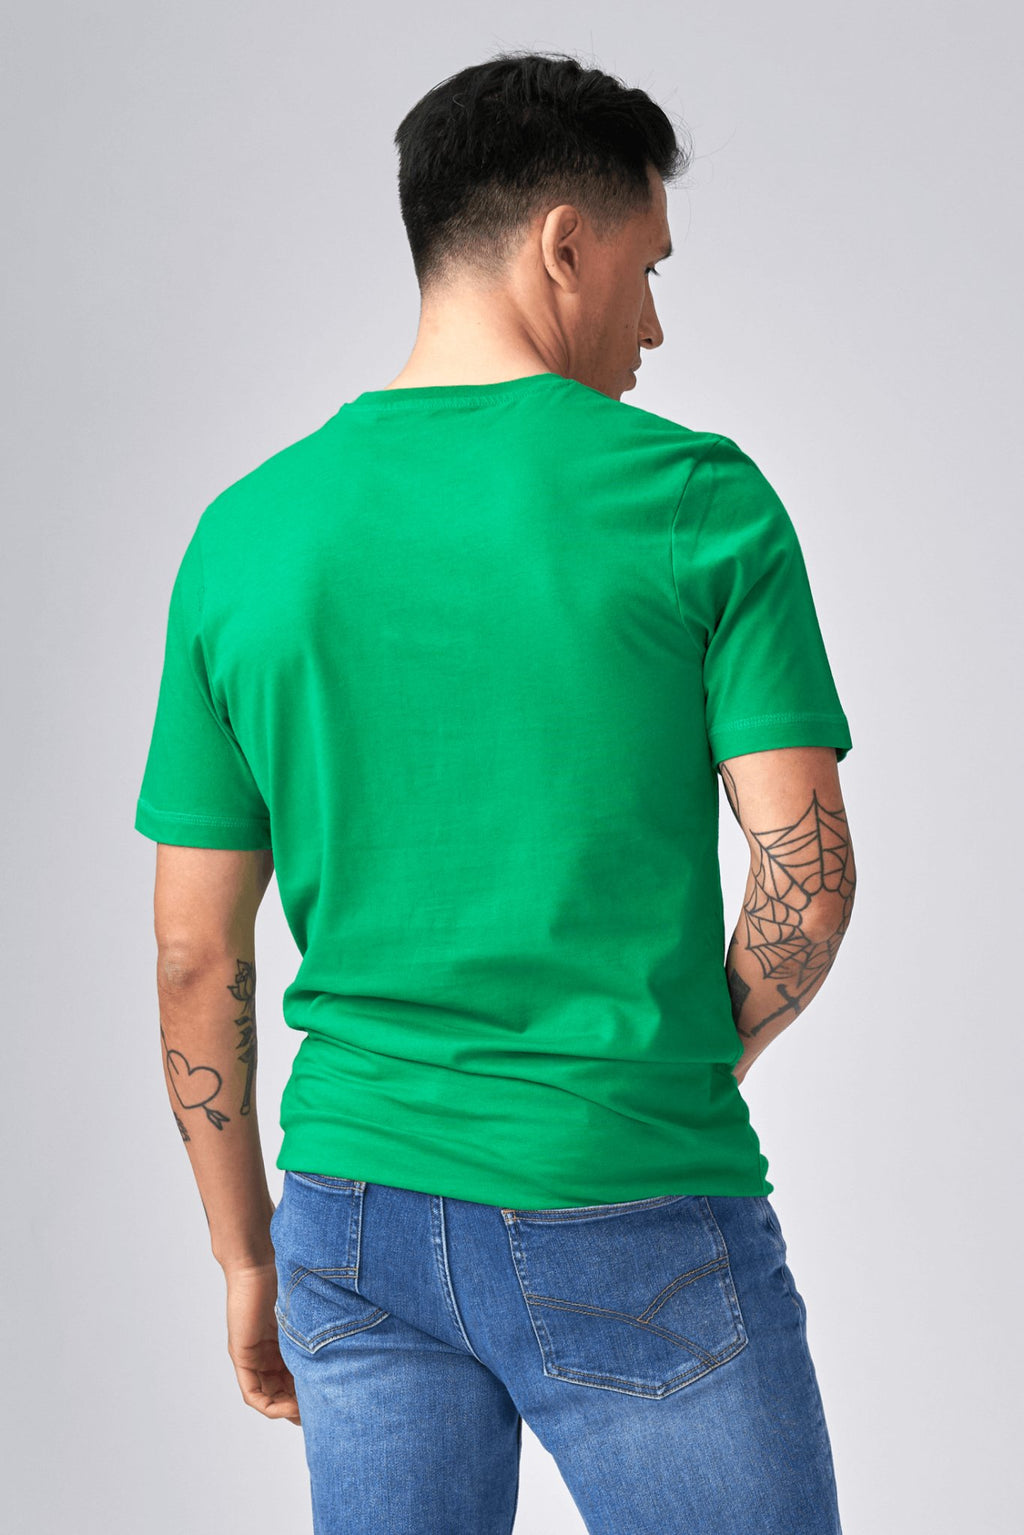 Bio -Basis -T -Shirt - Grün